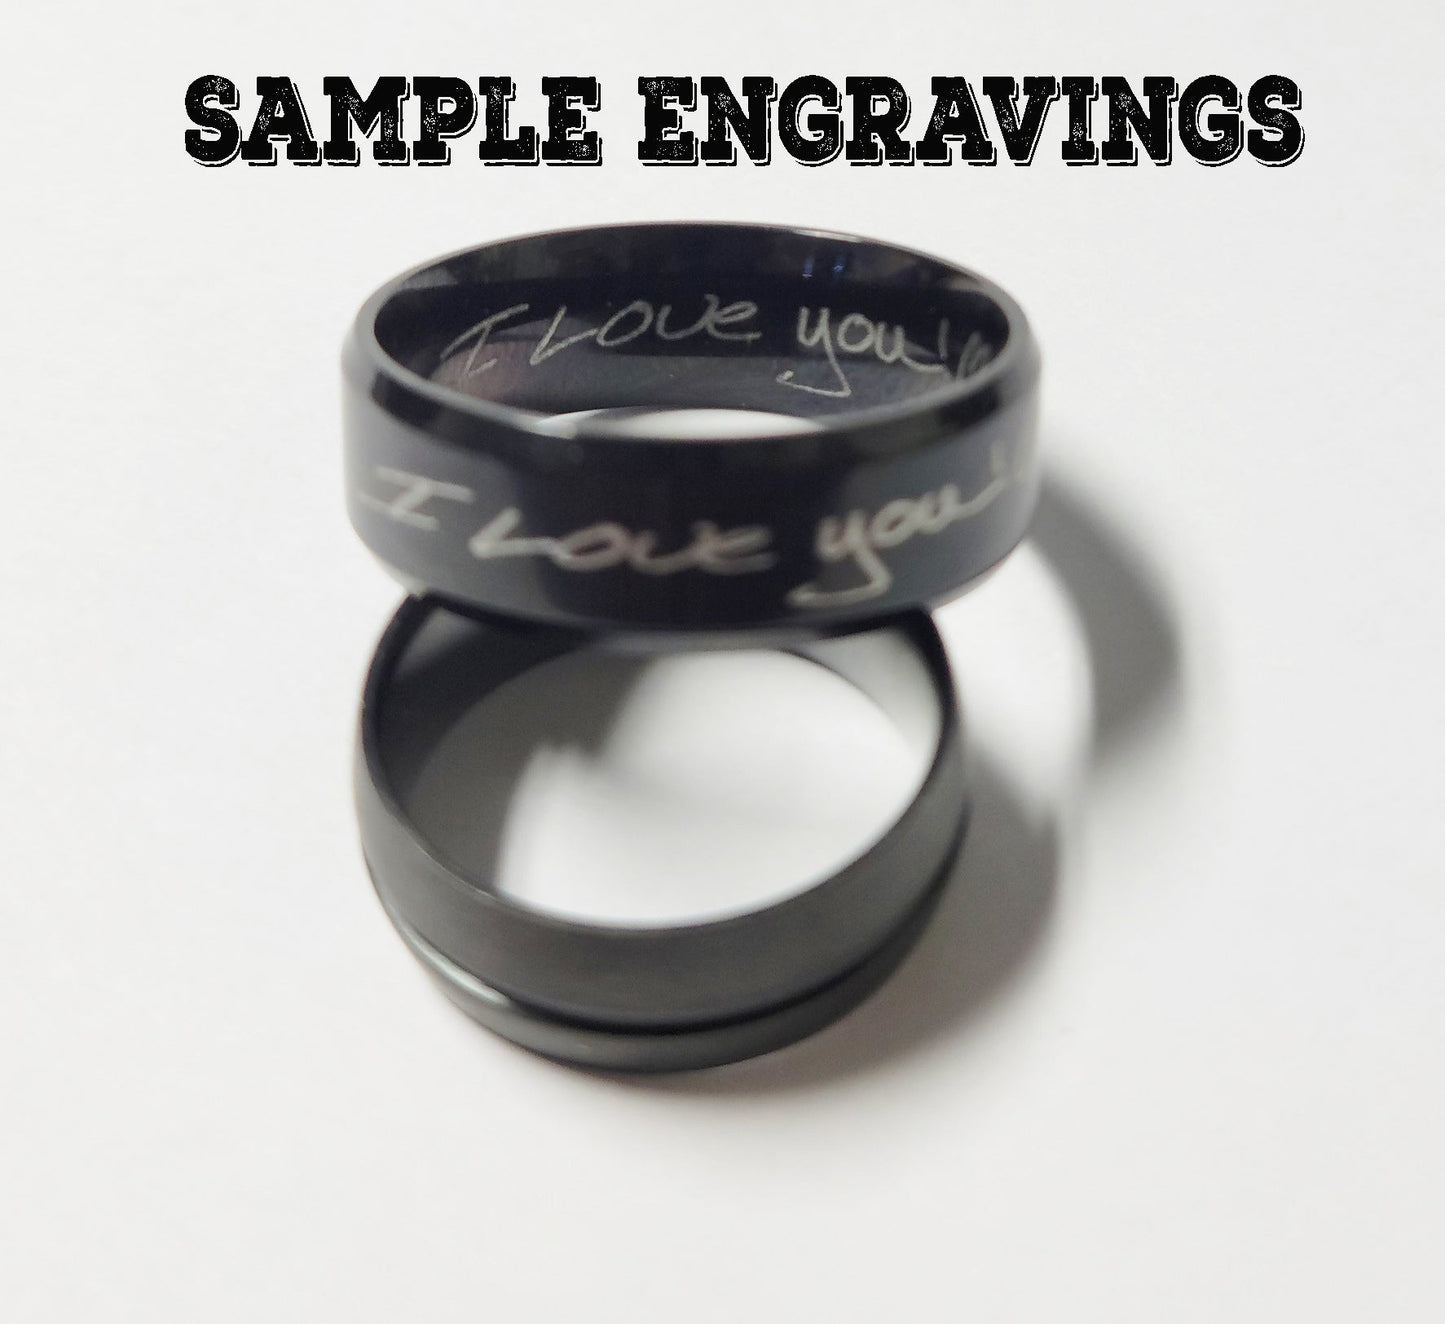 ThinkEngraved Engraved Ring Personalized Men's Black Promise Ring - Engraved Men's Ring Handwriting Ring